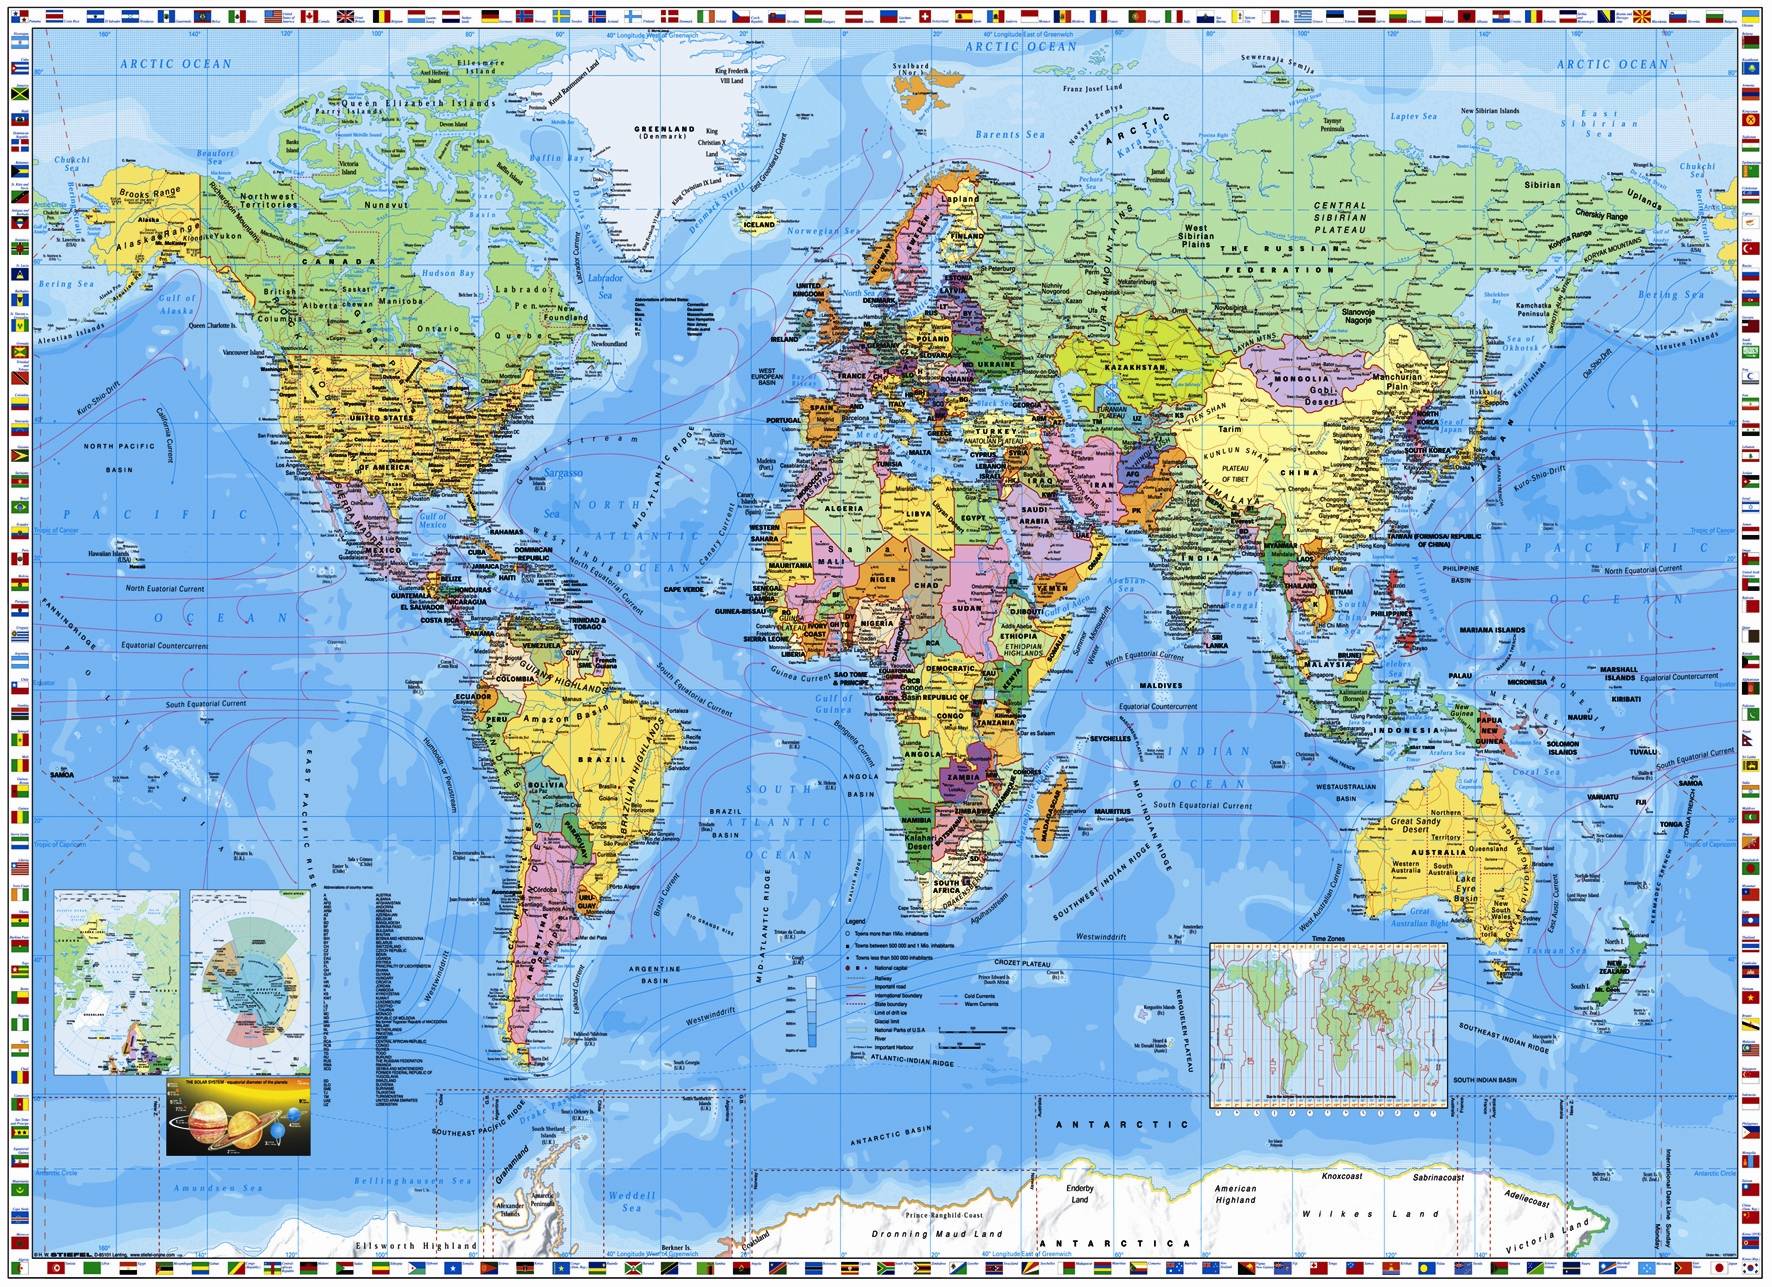 74 world map wallpaper high resolution on wallpapersafari